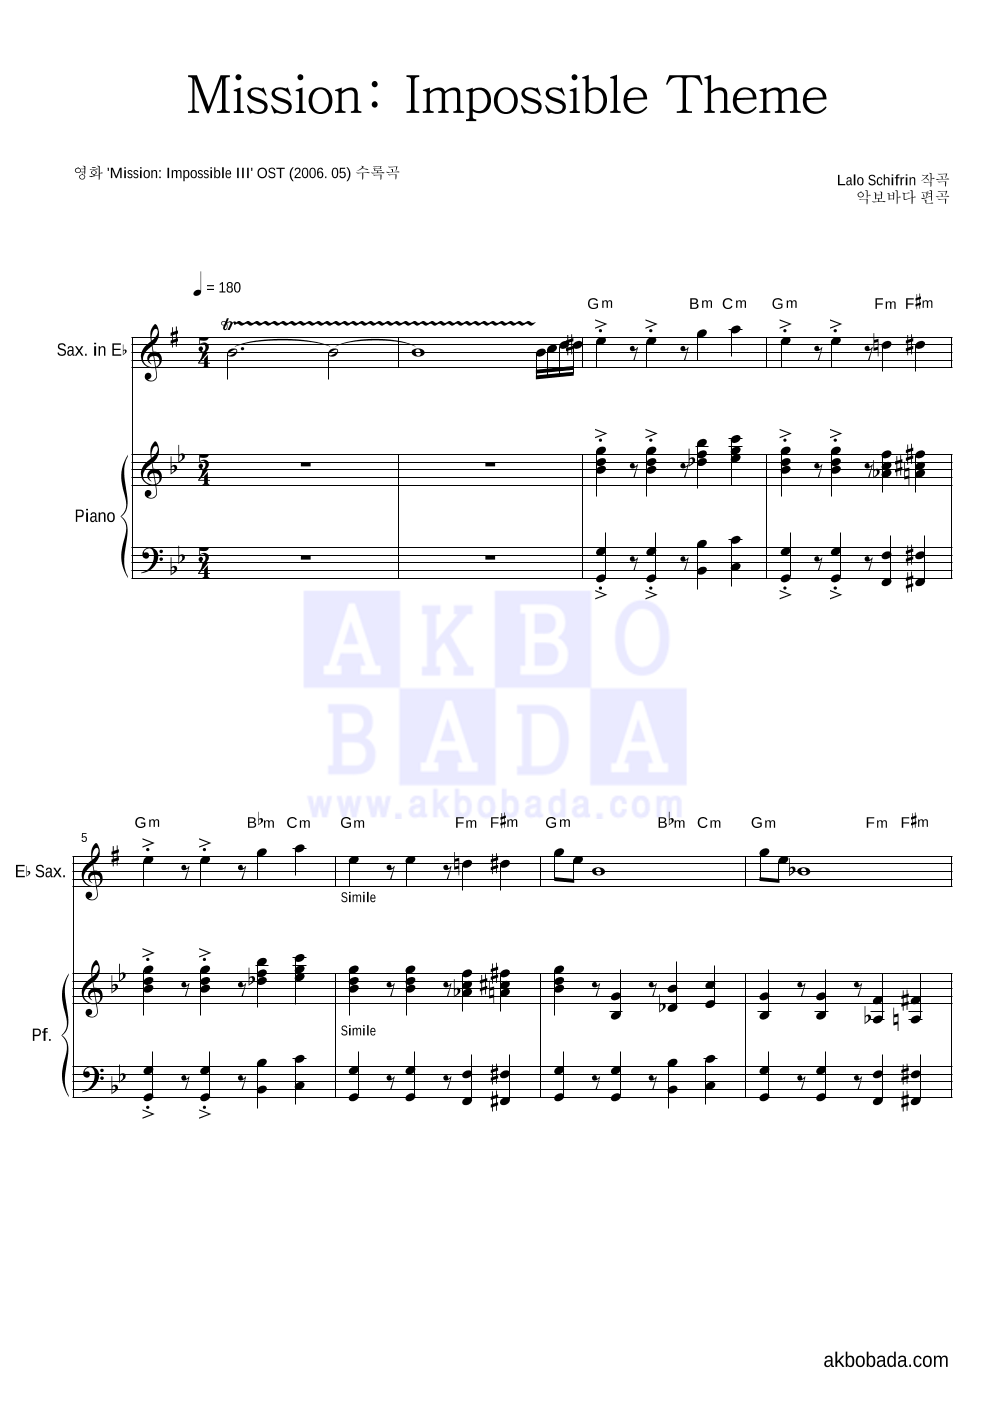 Lalo Schifrin - Mission: Impossible Theme Eb색소폰&피아노 악보 